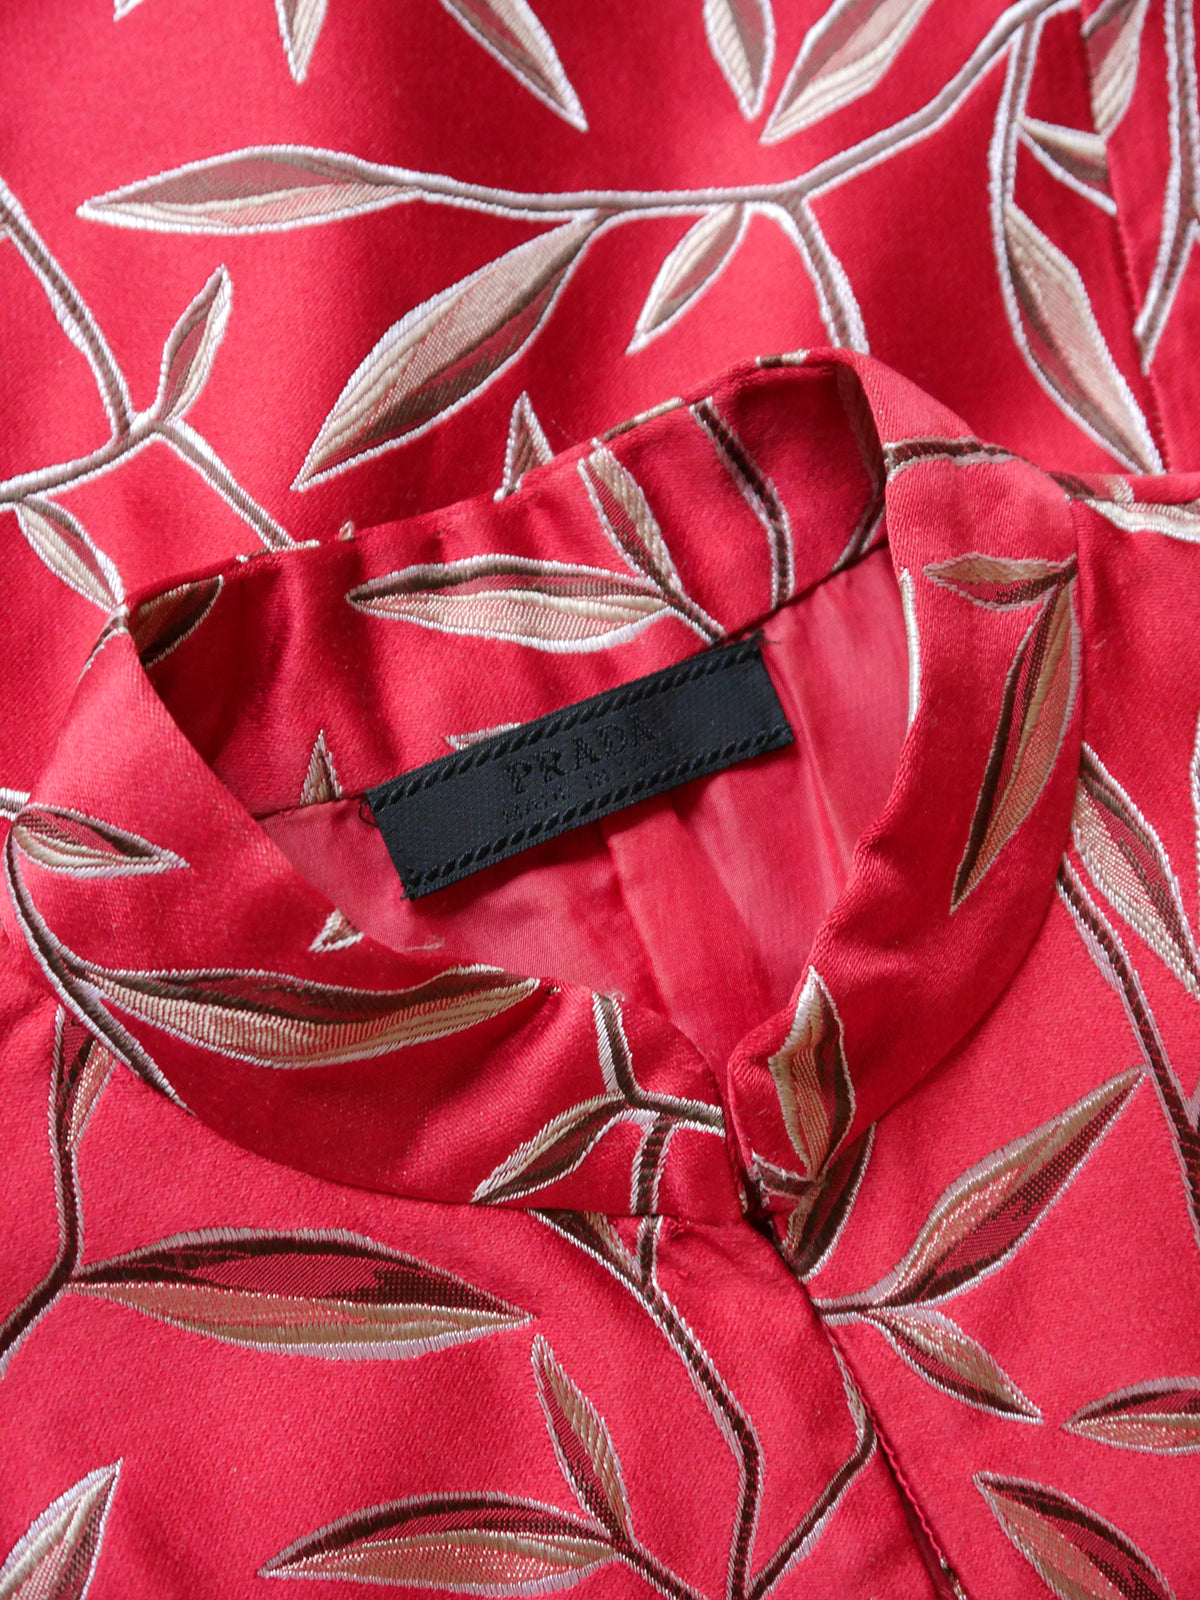 PRADA Spring 1997 1990s Vintage Chinoiserie Red Leaf Print Silk Dress